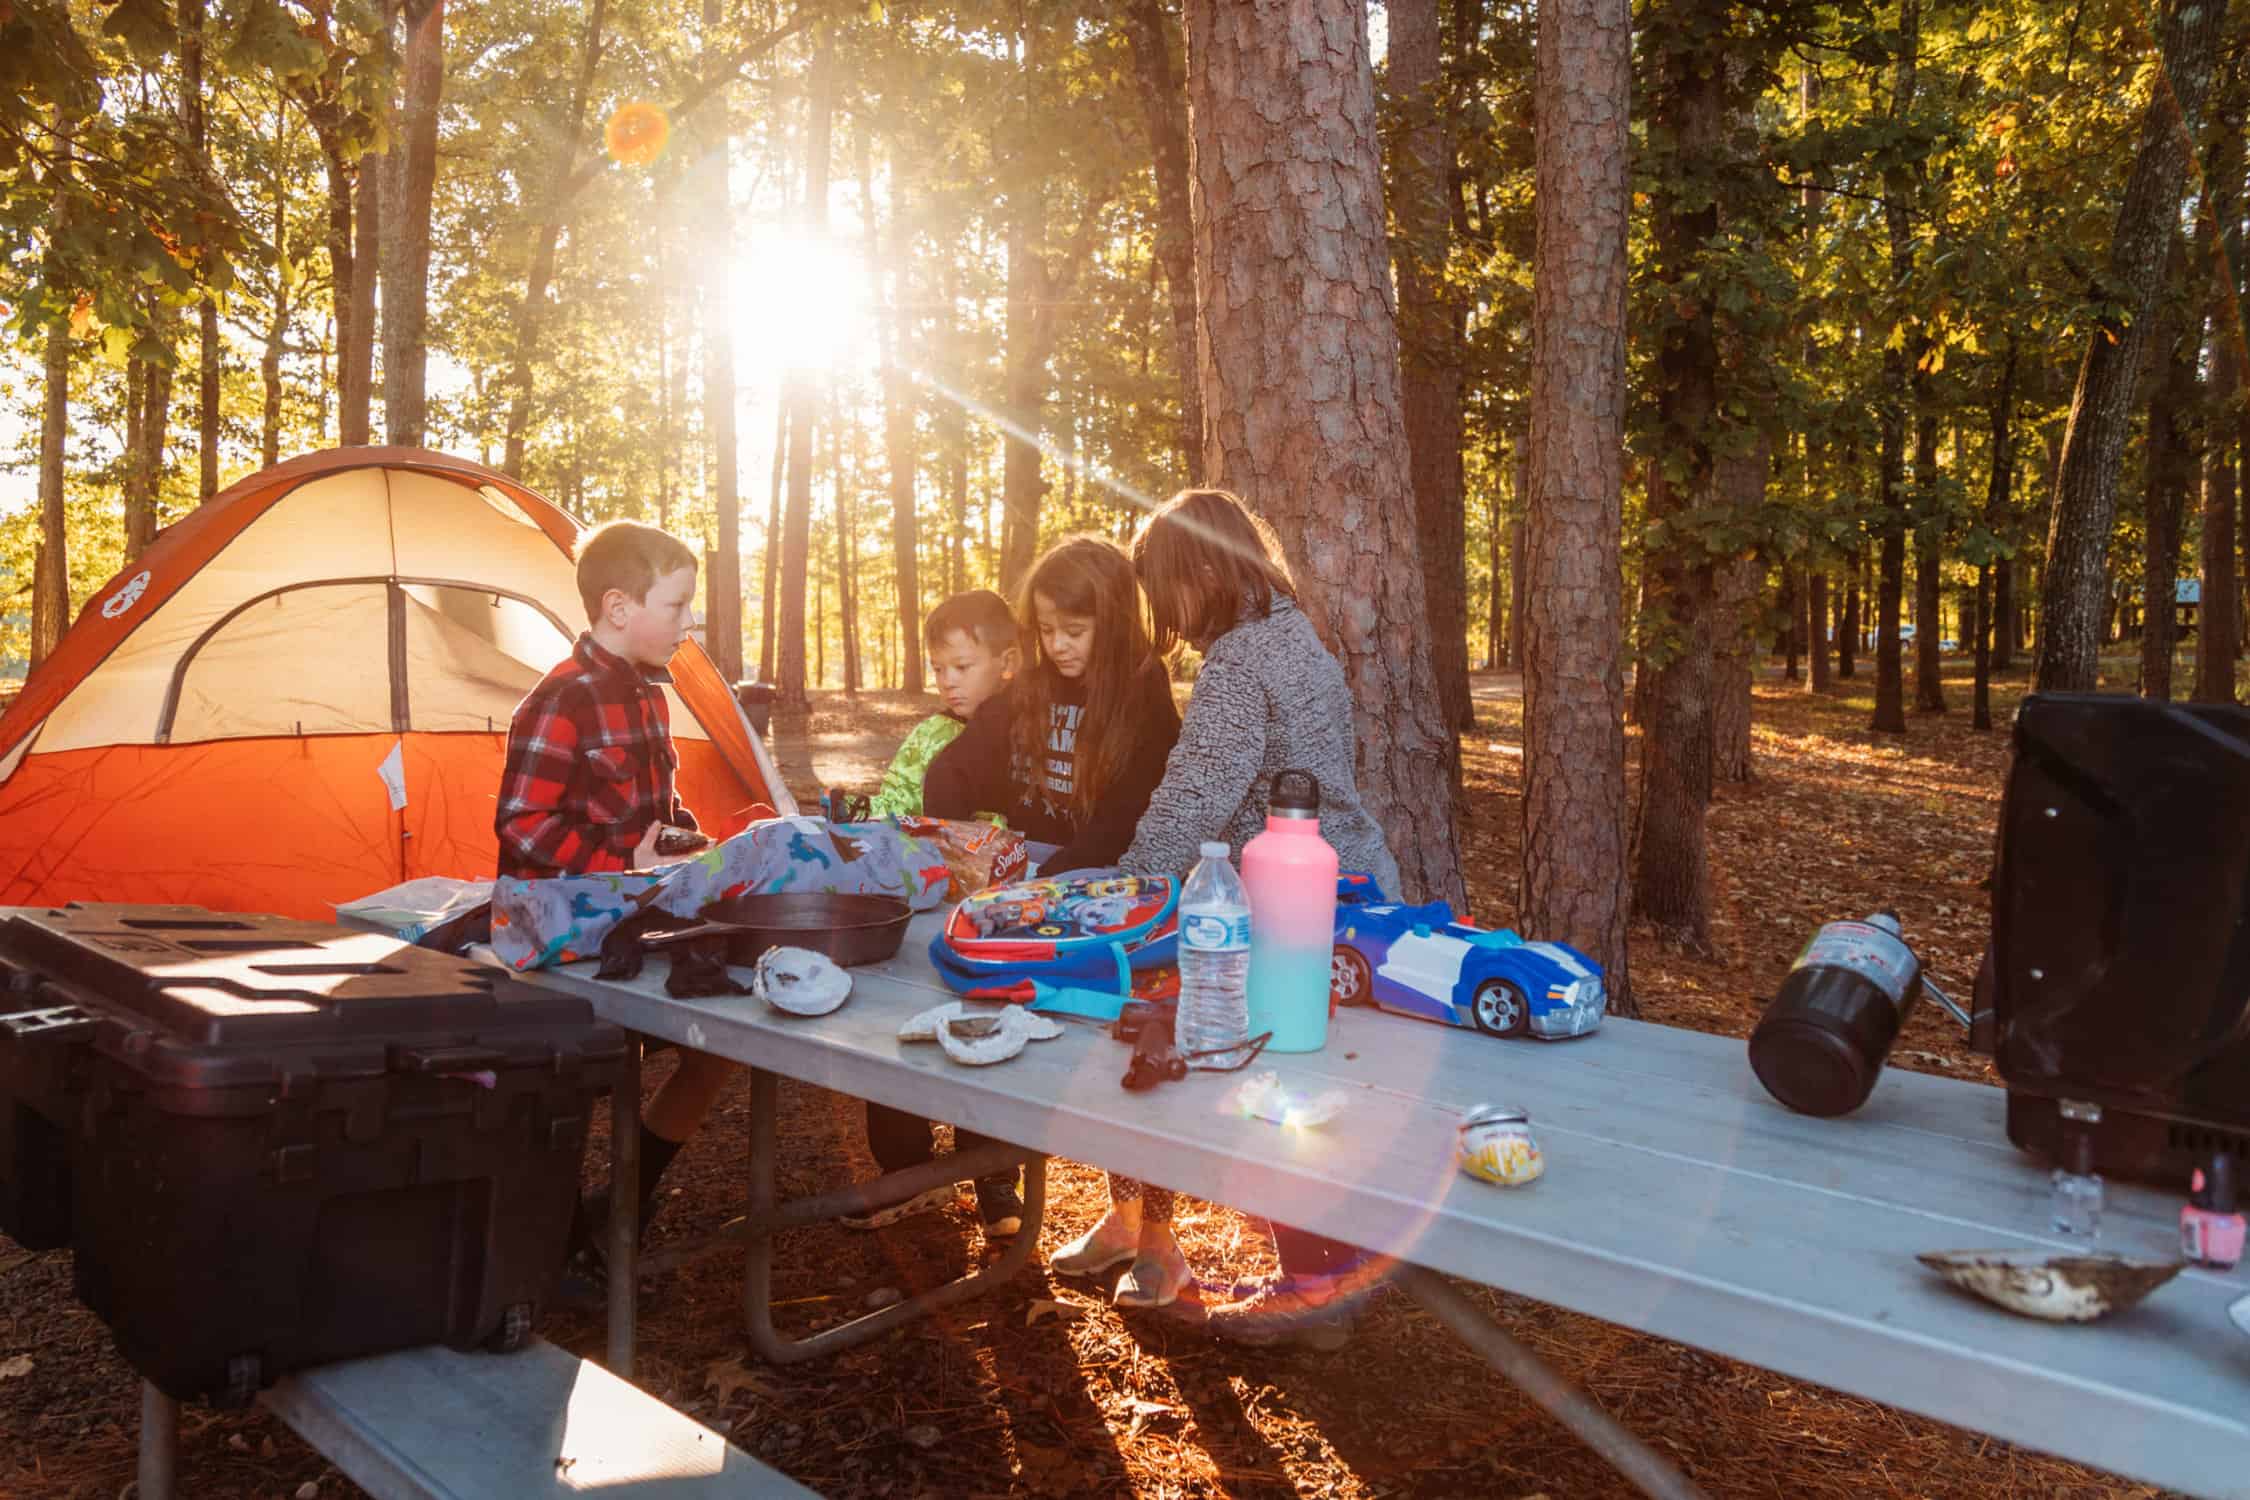 Camping Essentials Checklist - Easy Peazy Family Breaks